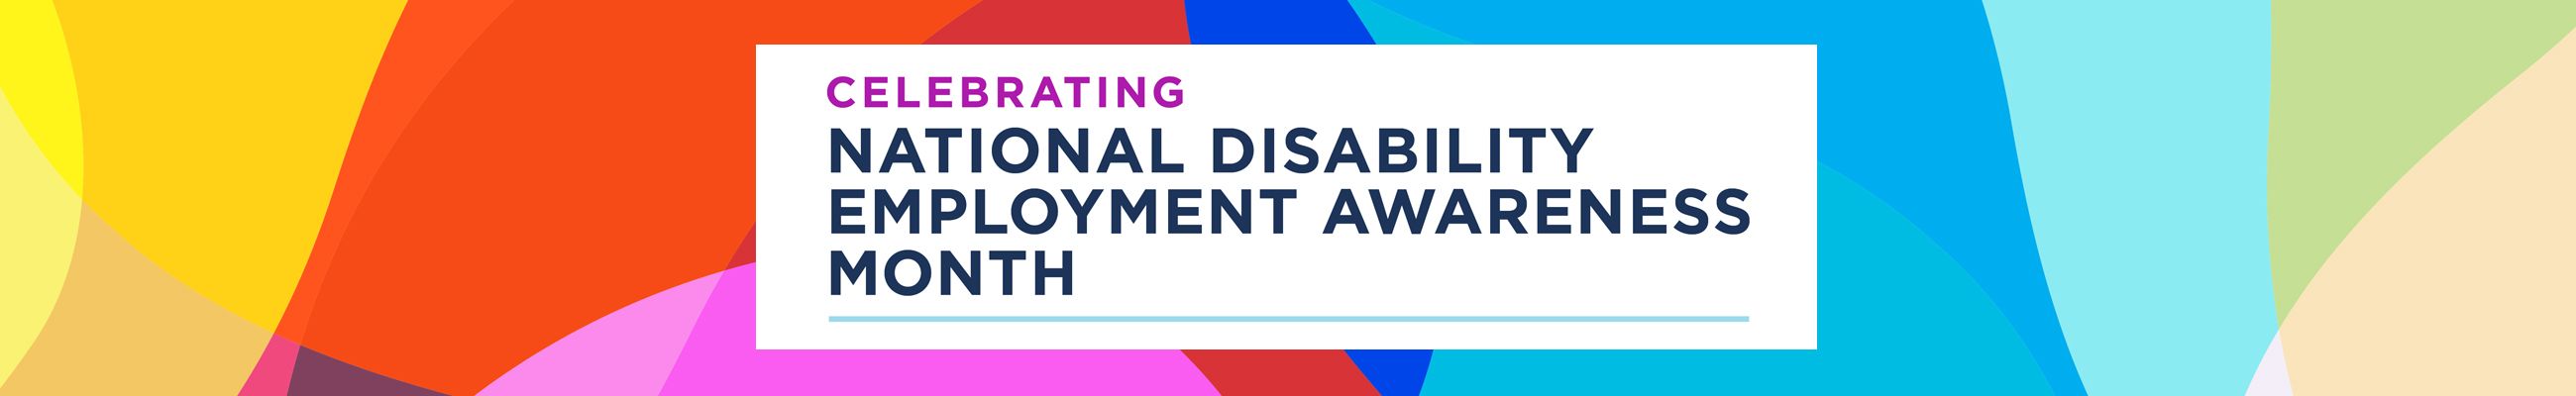 Celebrating National Disability Employment Awareness Month